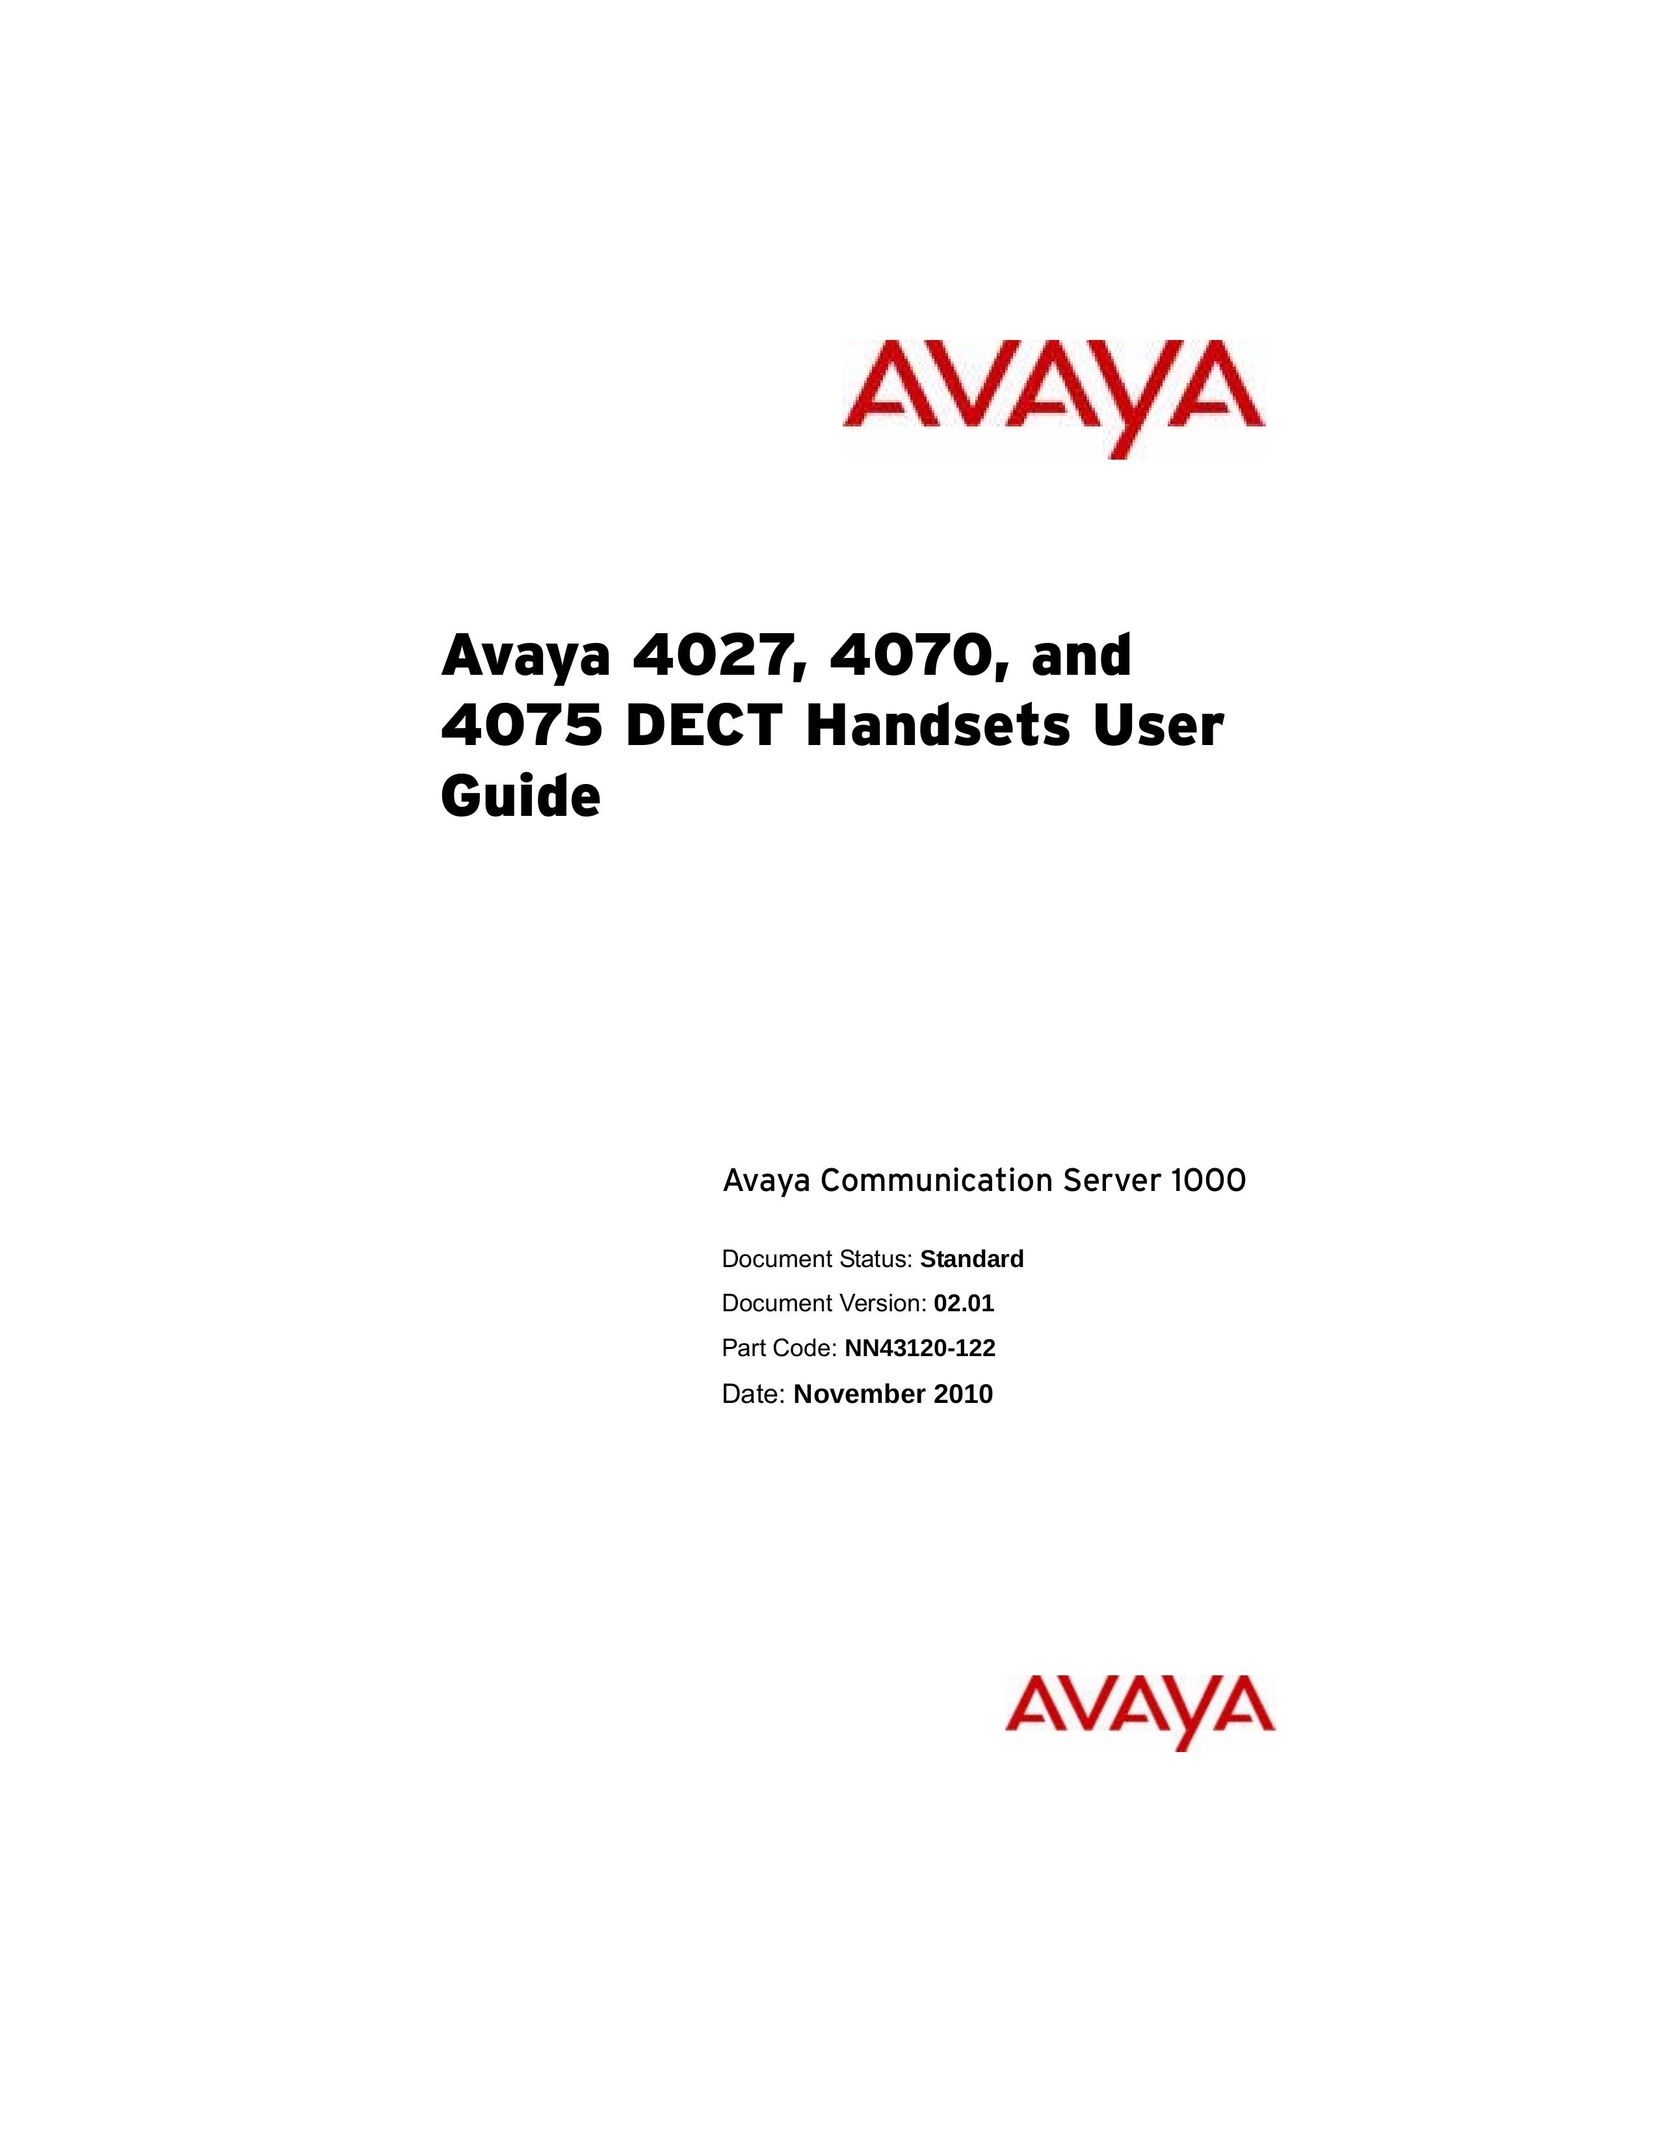 Avaya 4070 IP Phone User Manual